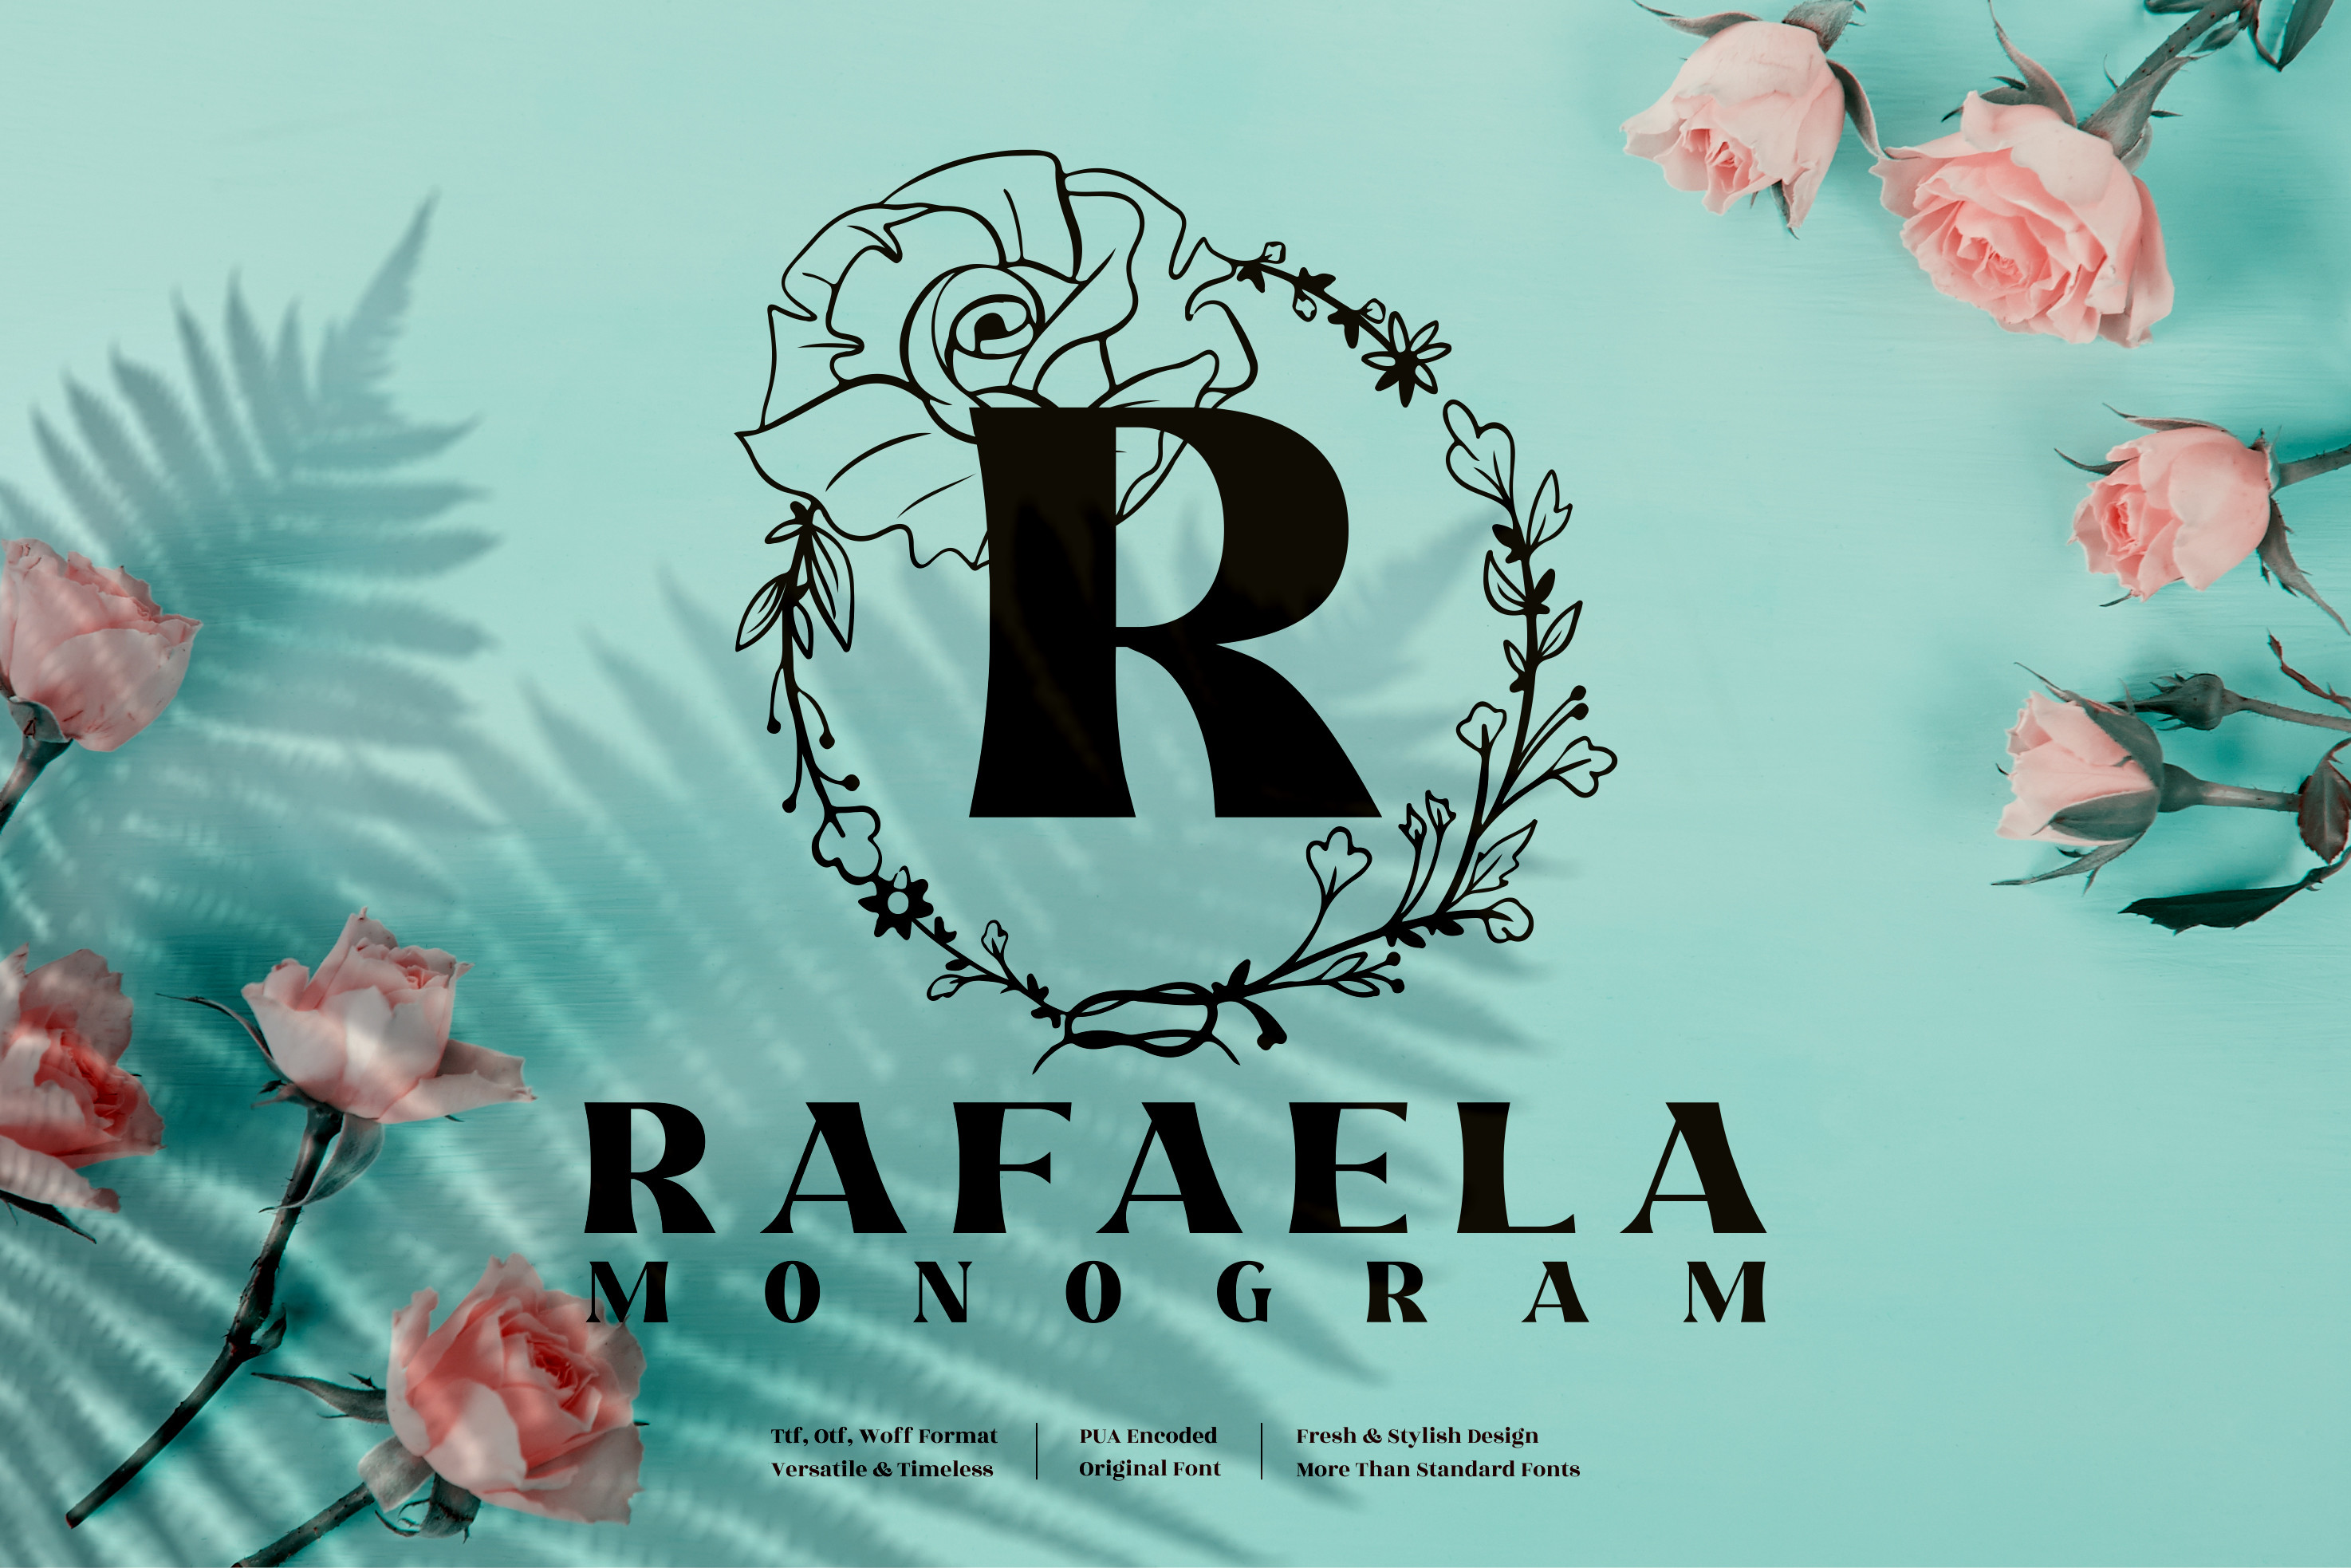 Rafaela Monogram